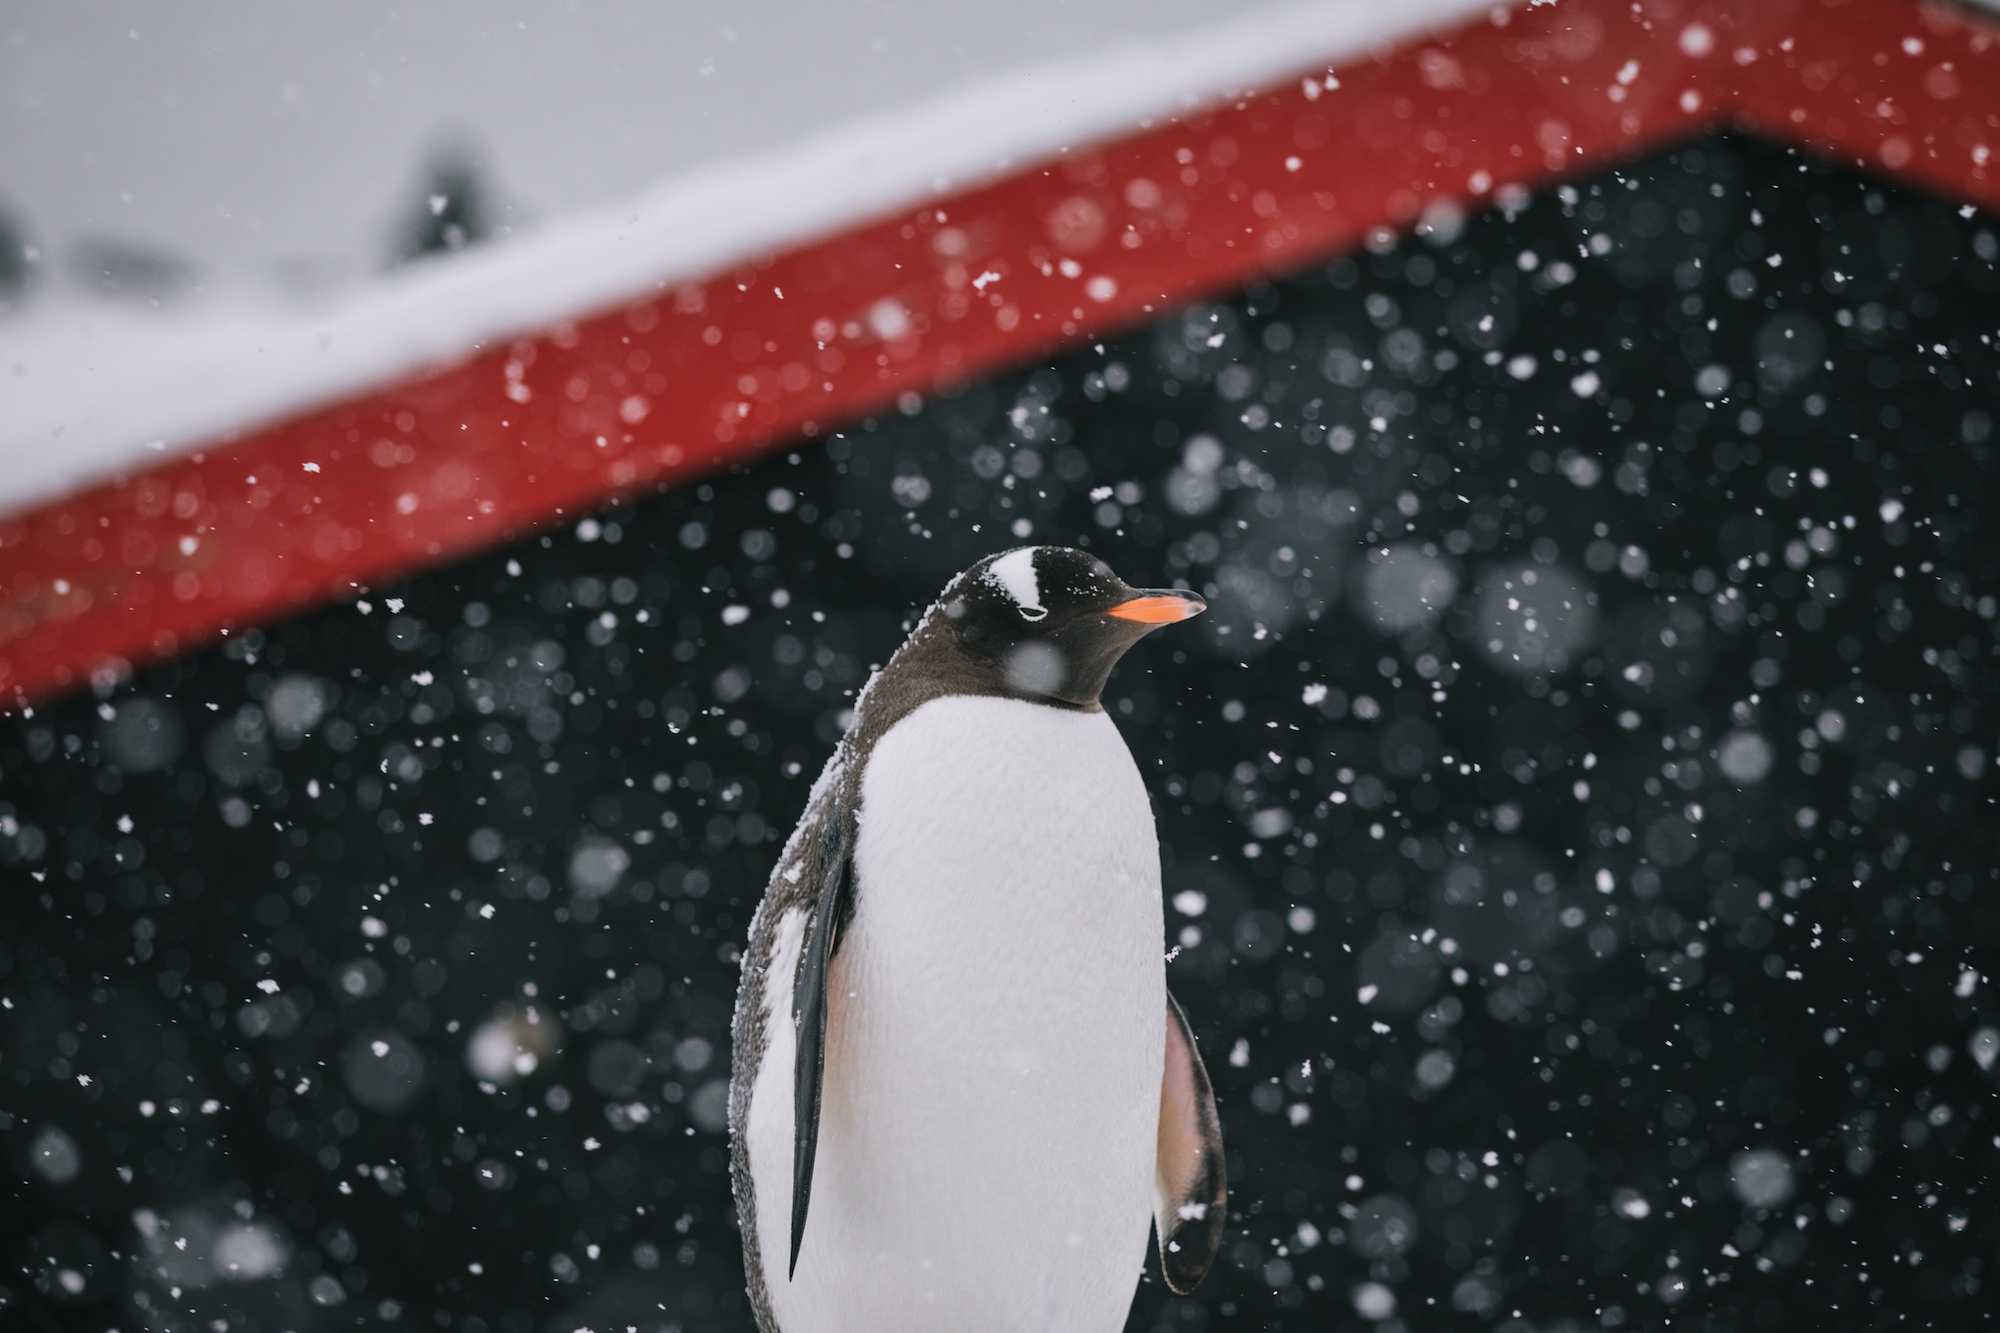 Antarctica is life-changing